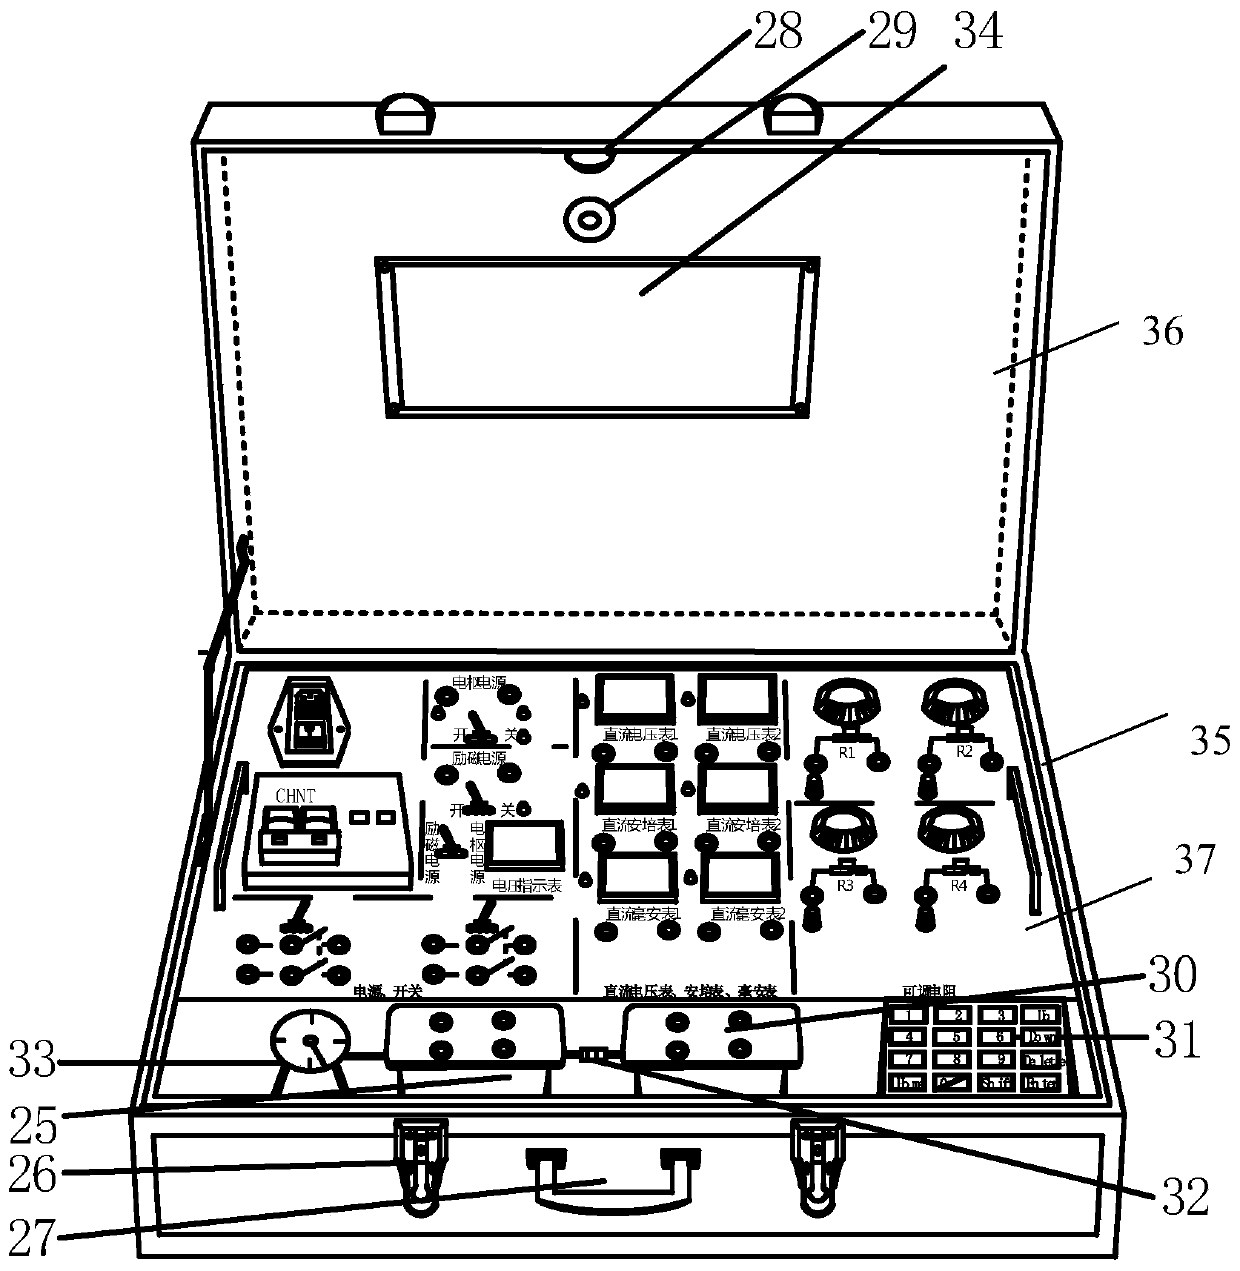 Portable DC motor experiment box